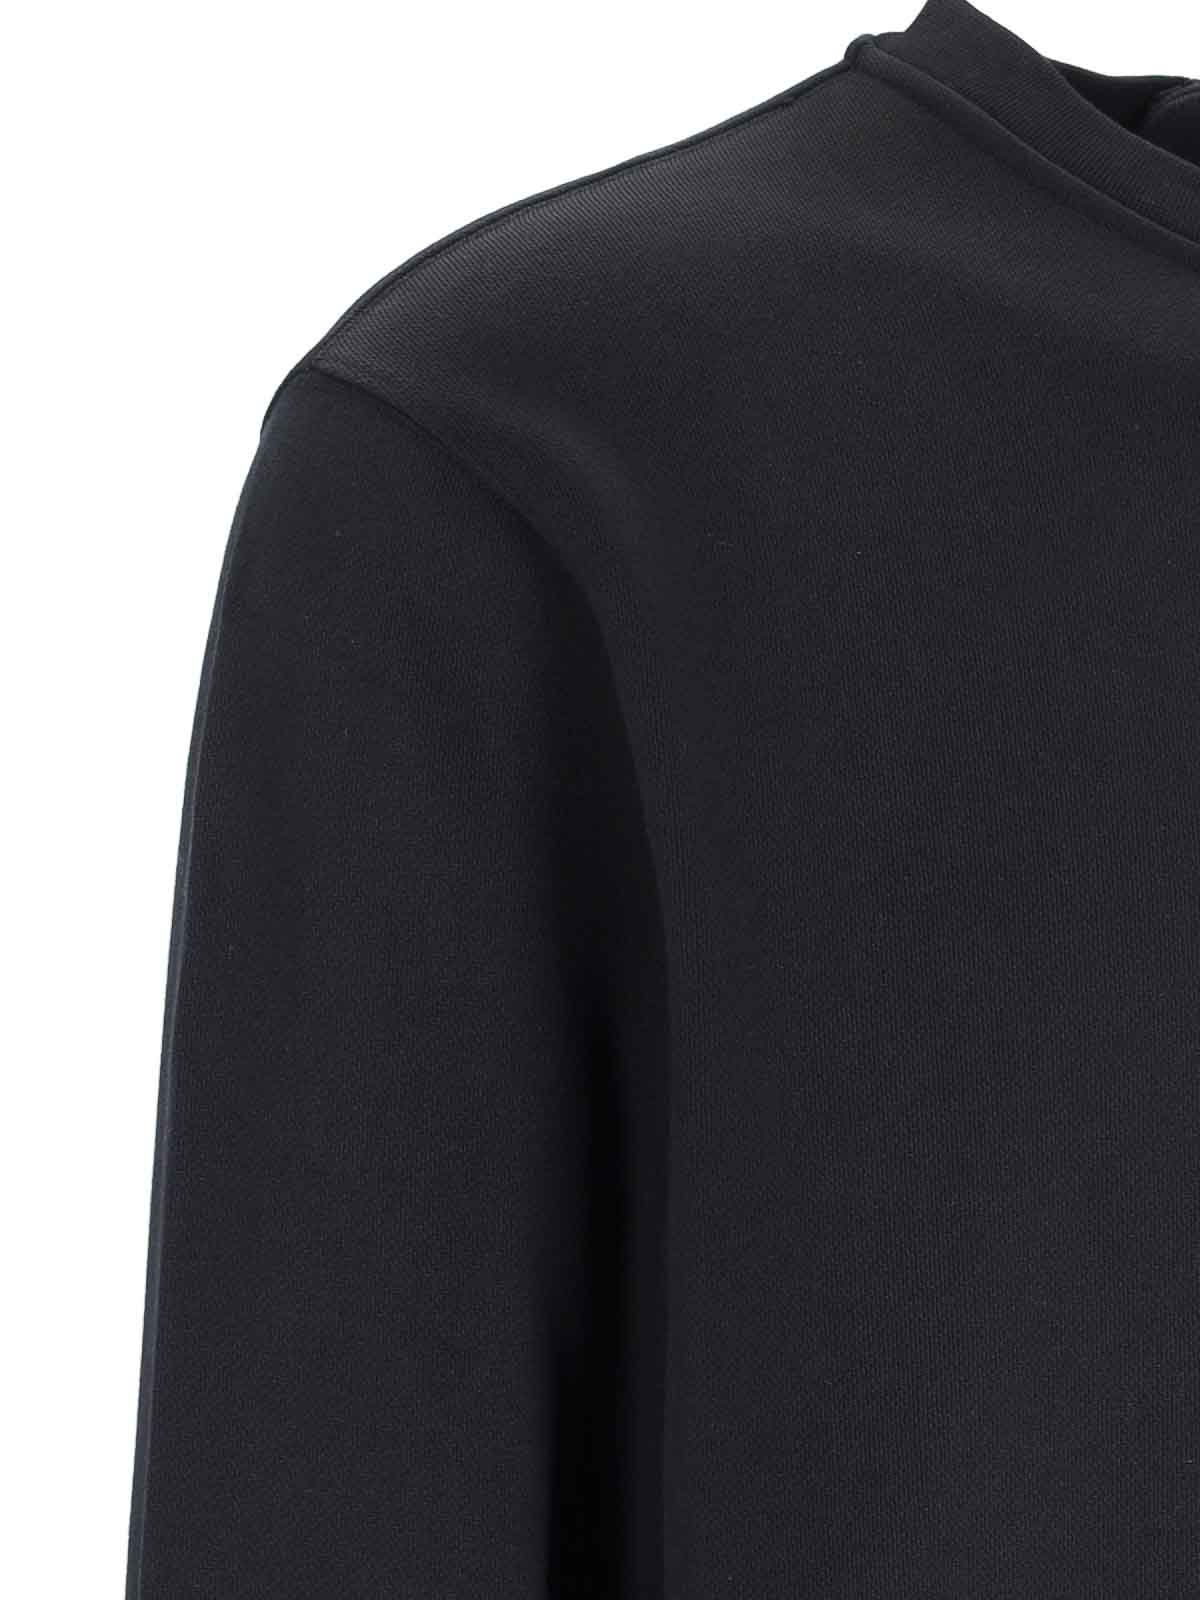 Shop Random Identities Crewneck Sweatshirt In Black